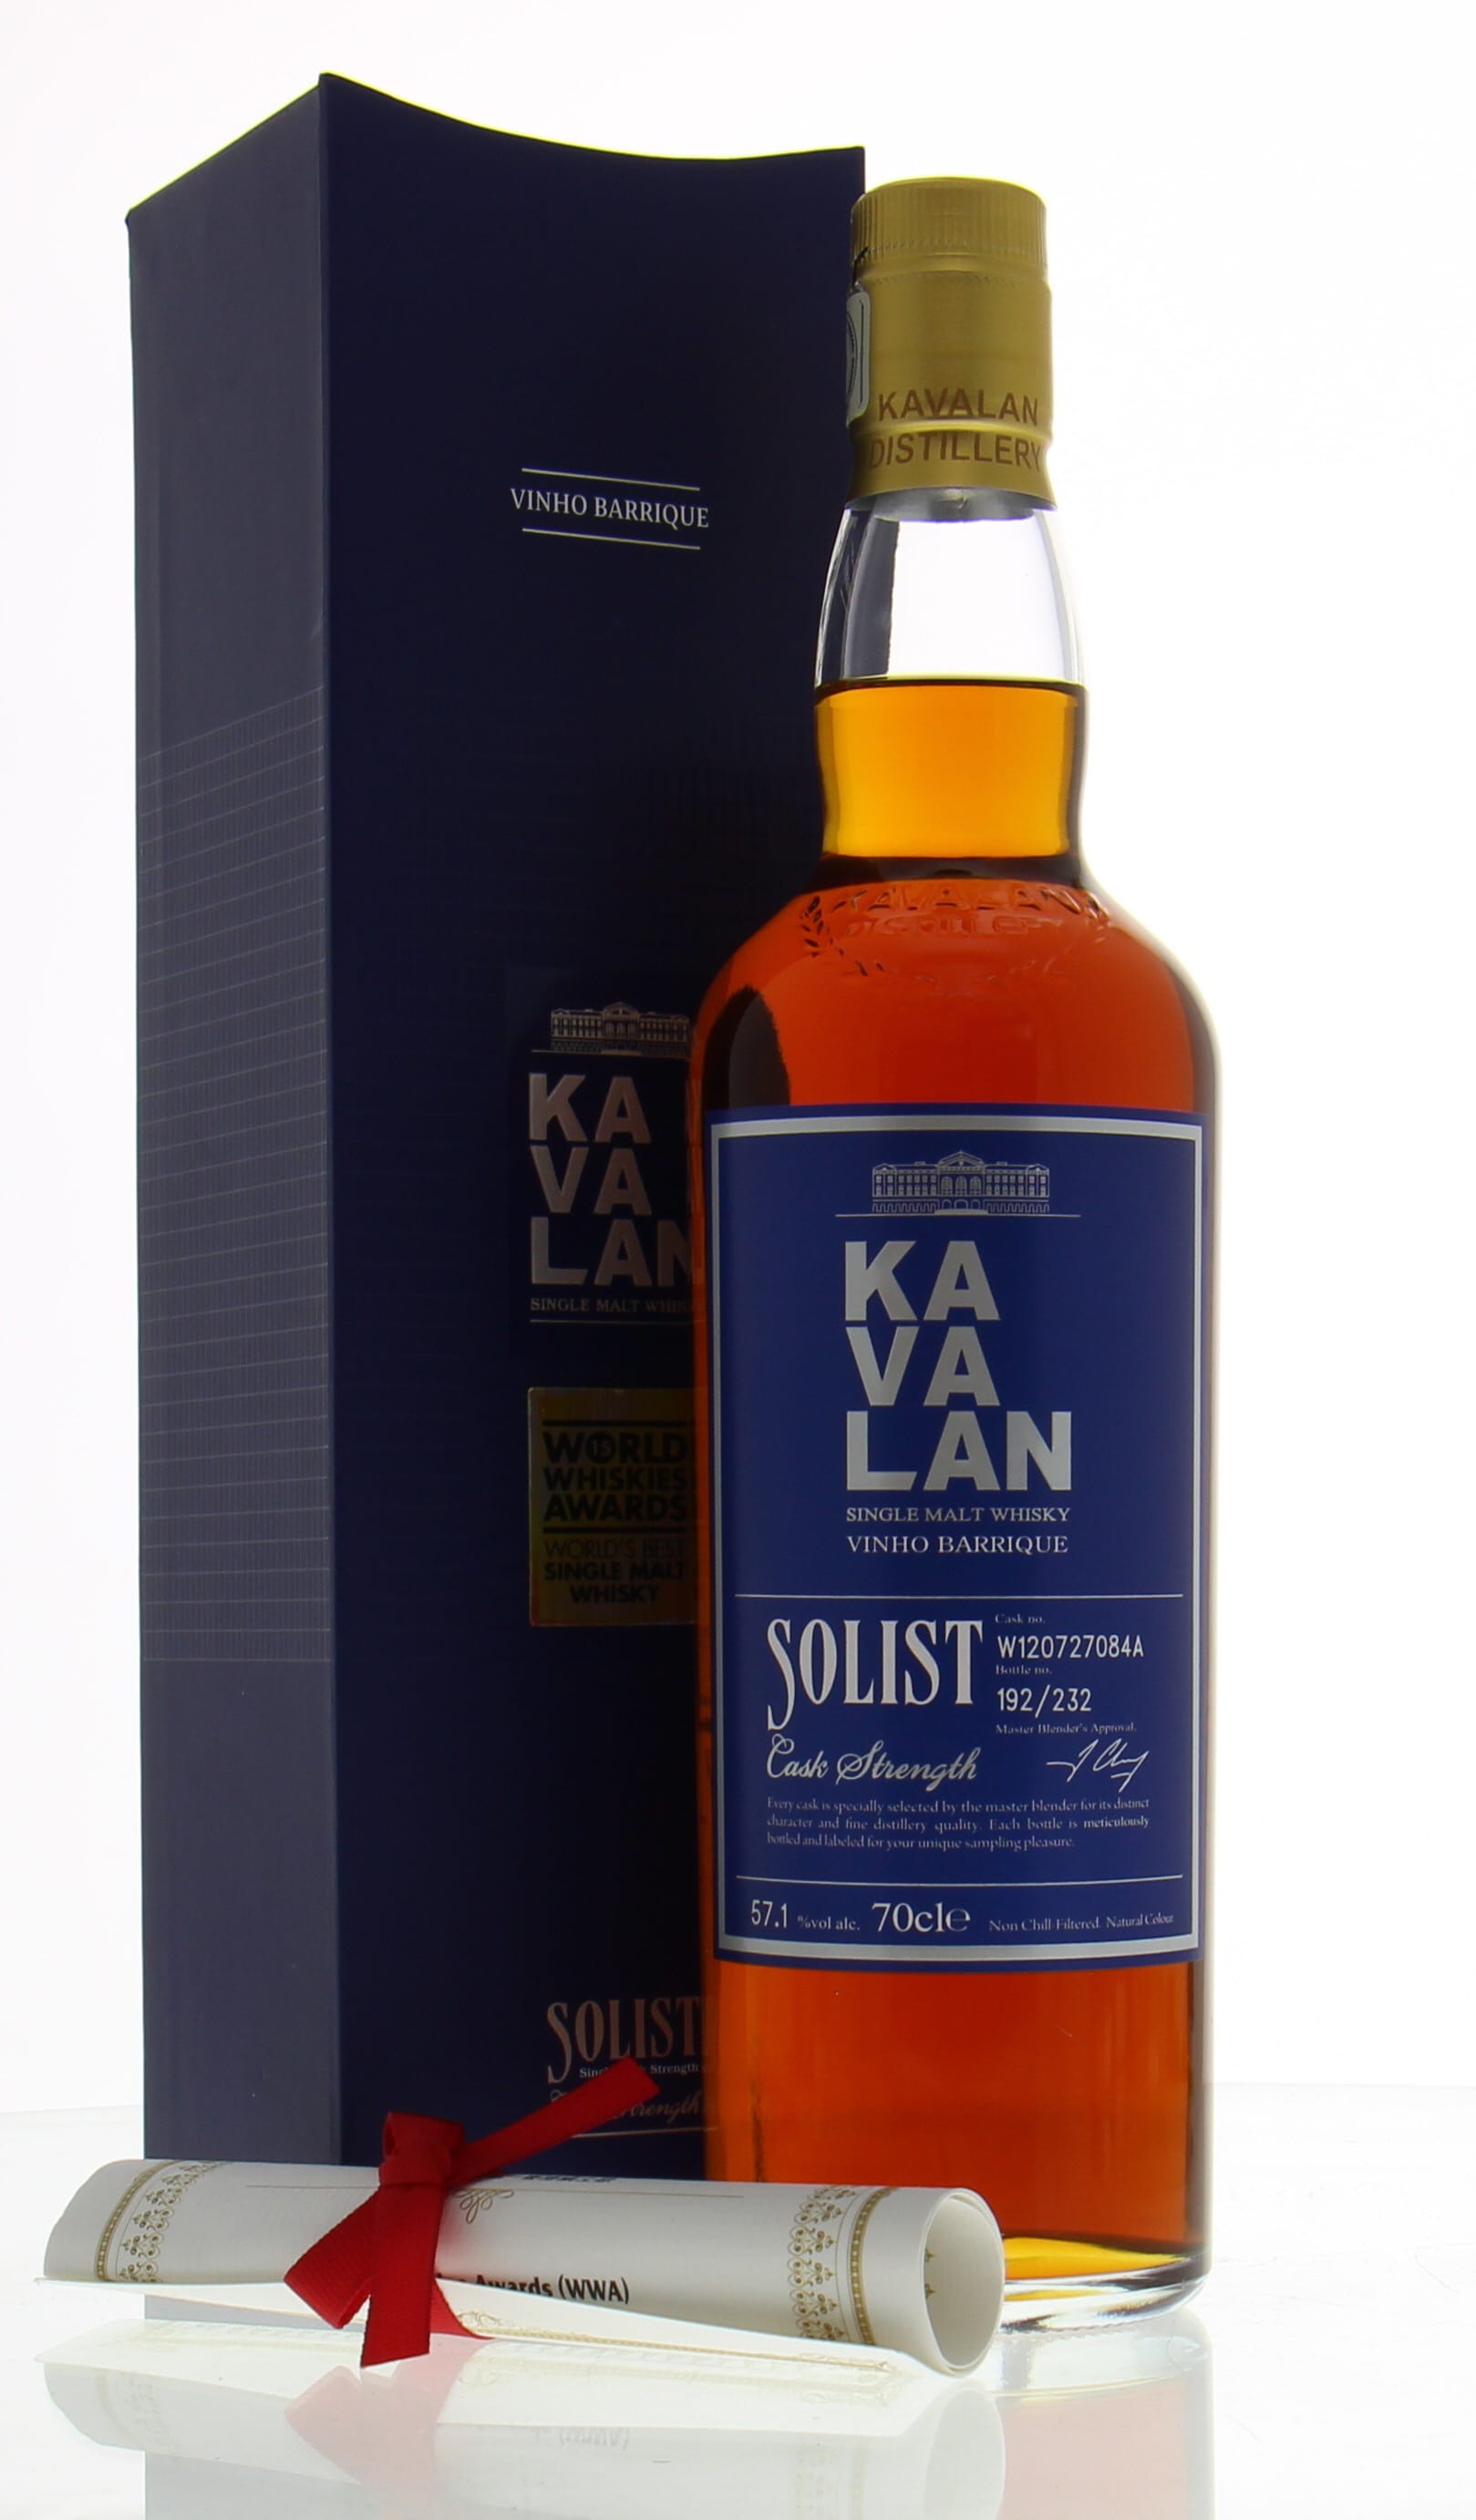 Kavalan - Solist Vinho Barrique Cask W120727084A World's best single malt whisky 2015 57,1% 2012 In Original Container